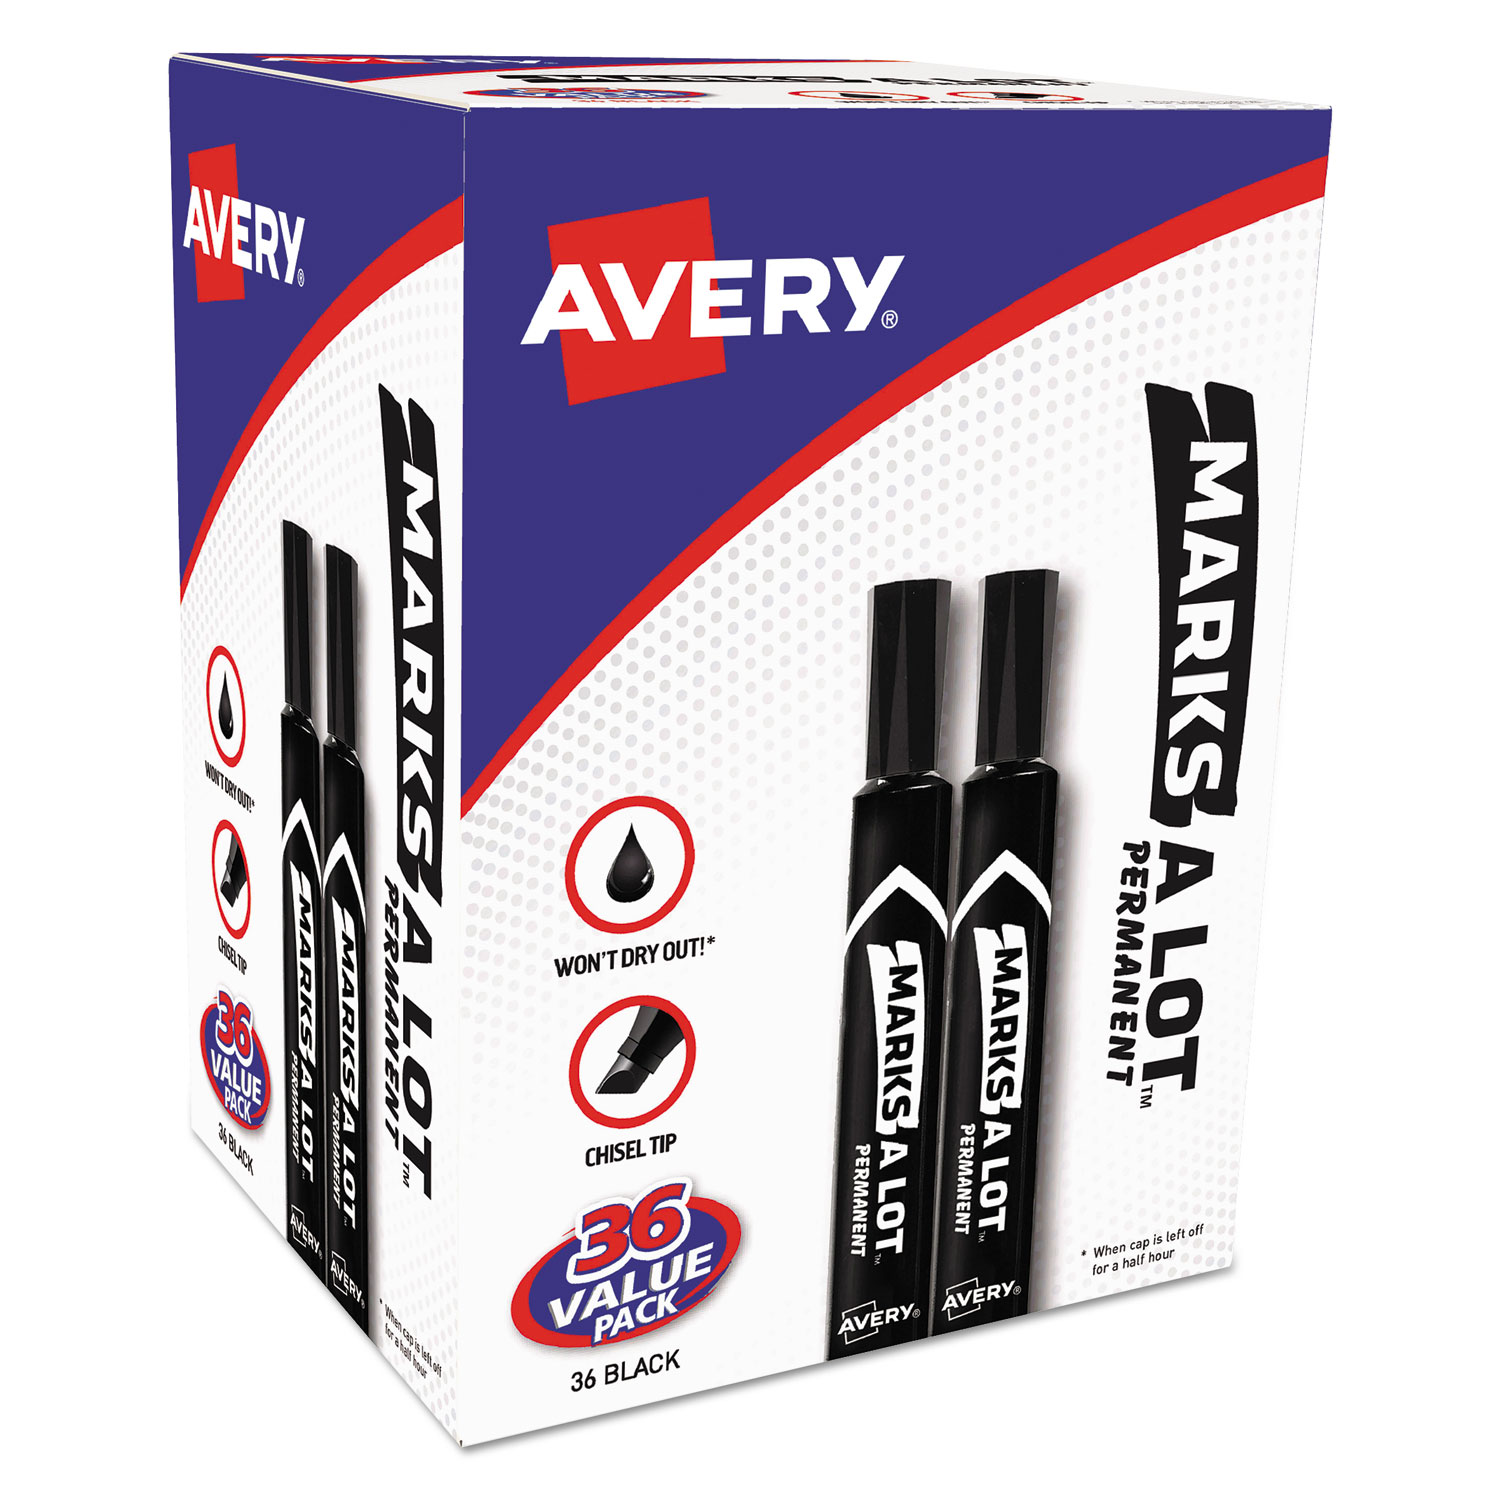  Avery 98206 MARKS A LOT Large Desk-Style Permanent Marker Value Pack, Broad Chisel Tip, Black, 36/Pack (AVE98206) 